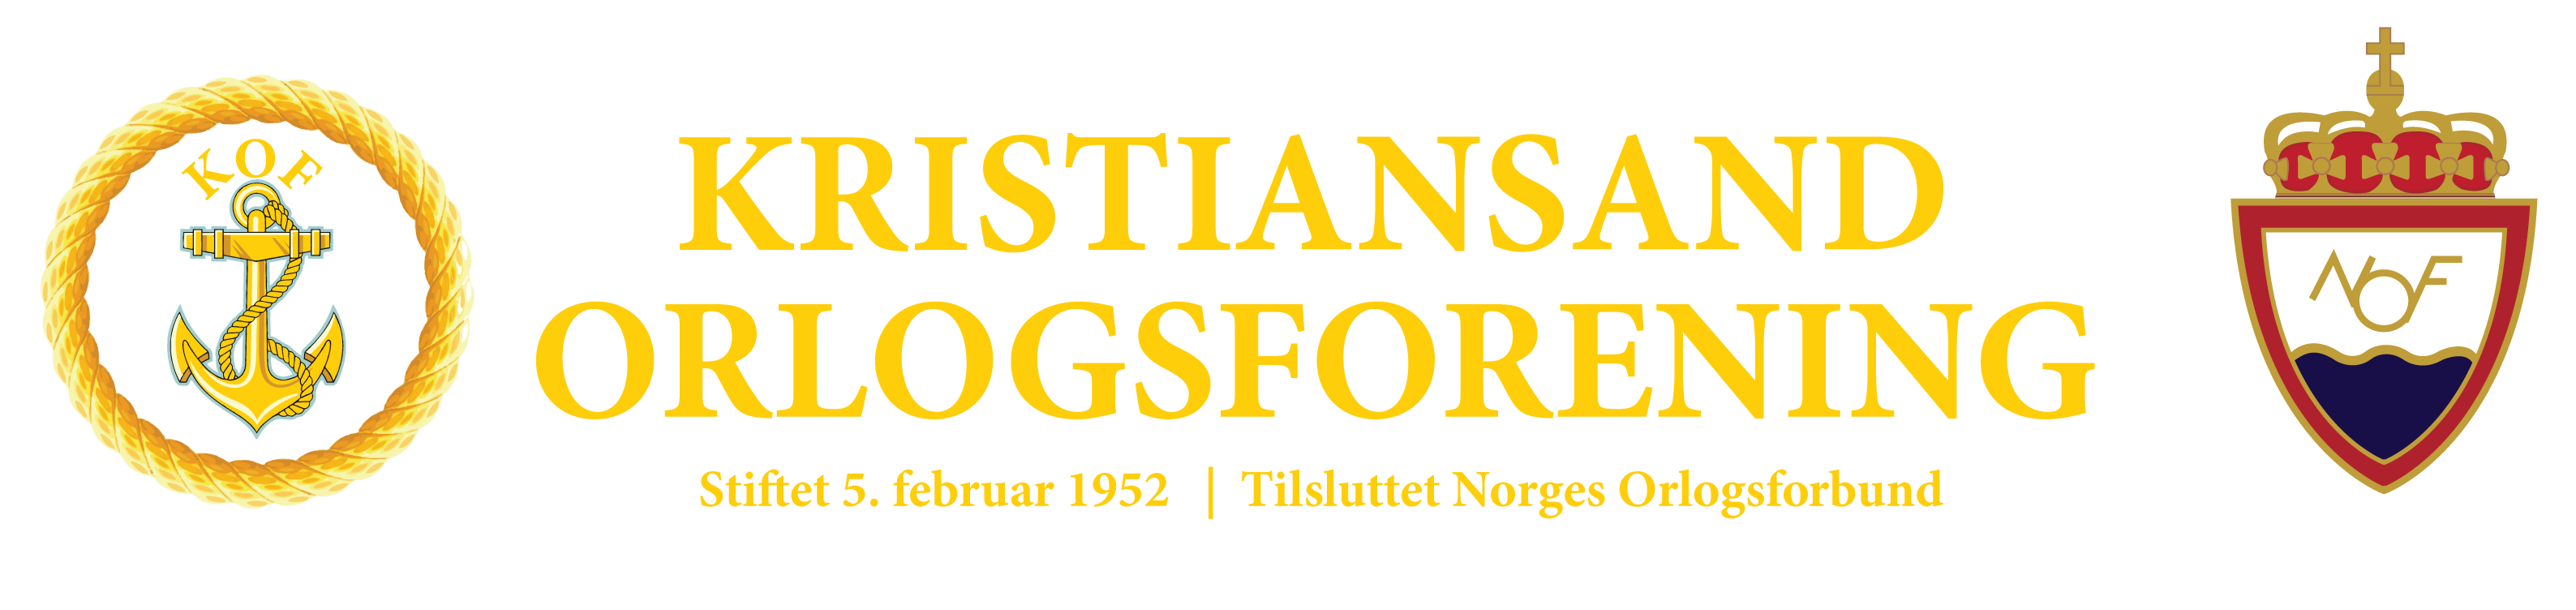 Kristiansand Orlogsforening